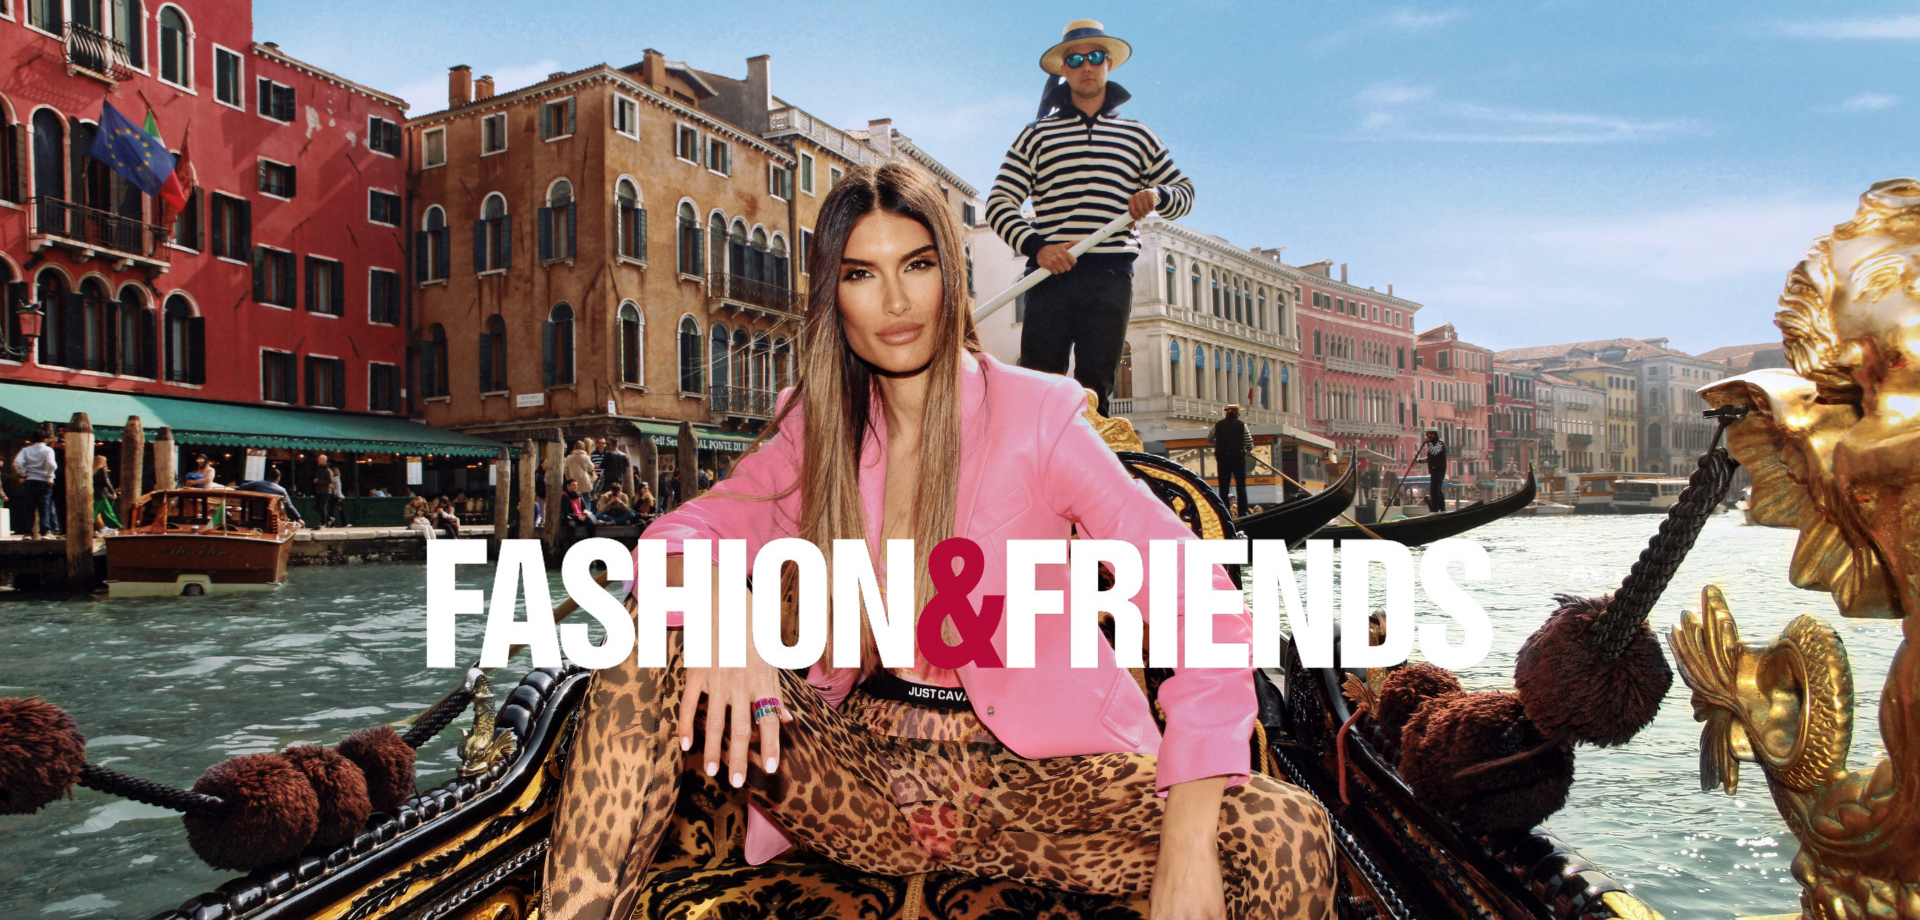 Take me to Venice – Fashion&Friends digitalna kampanja